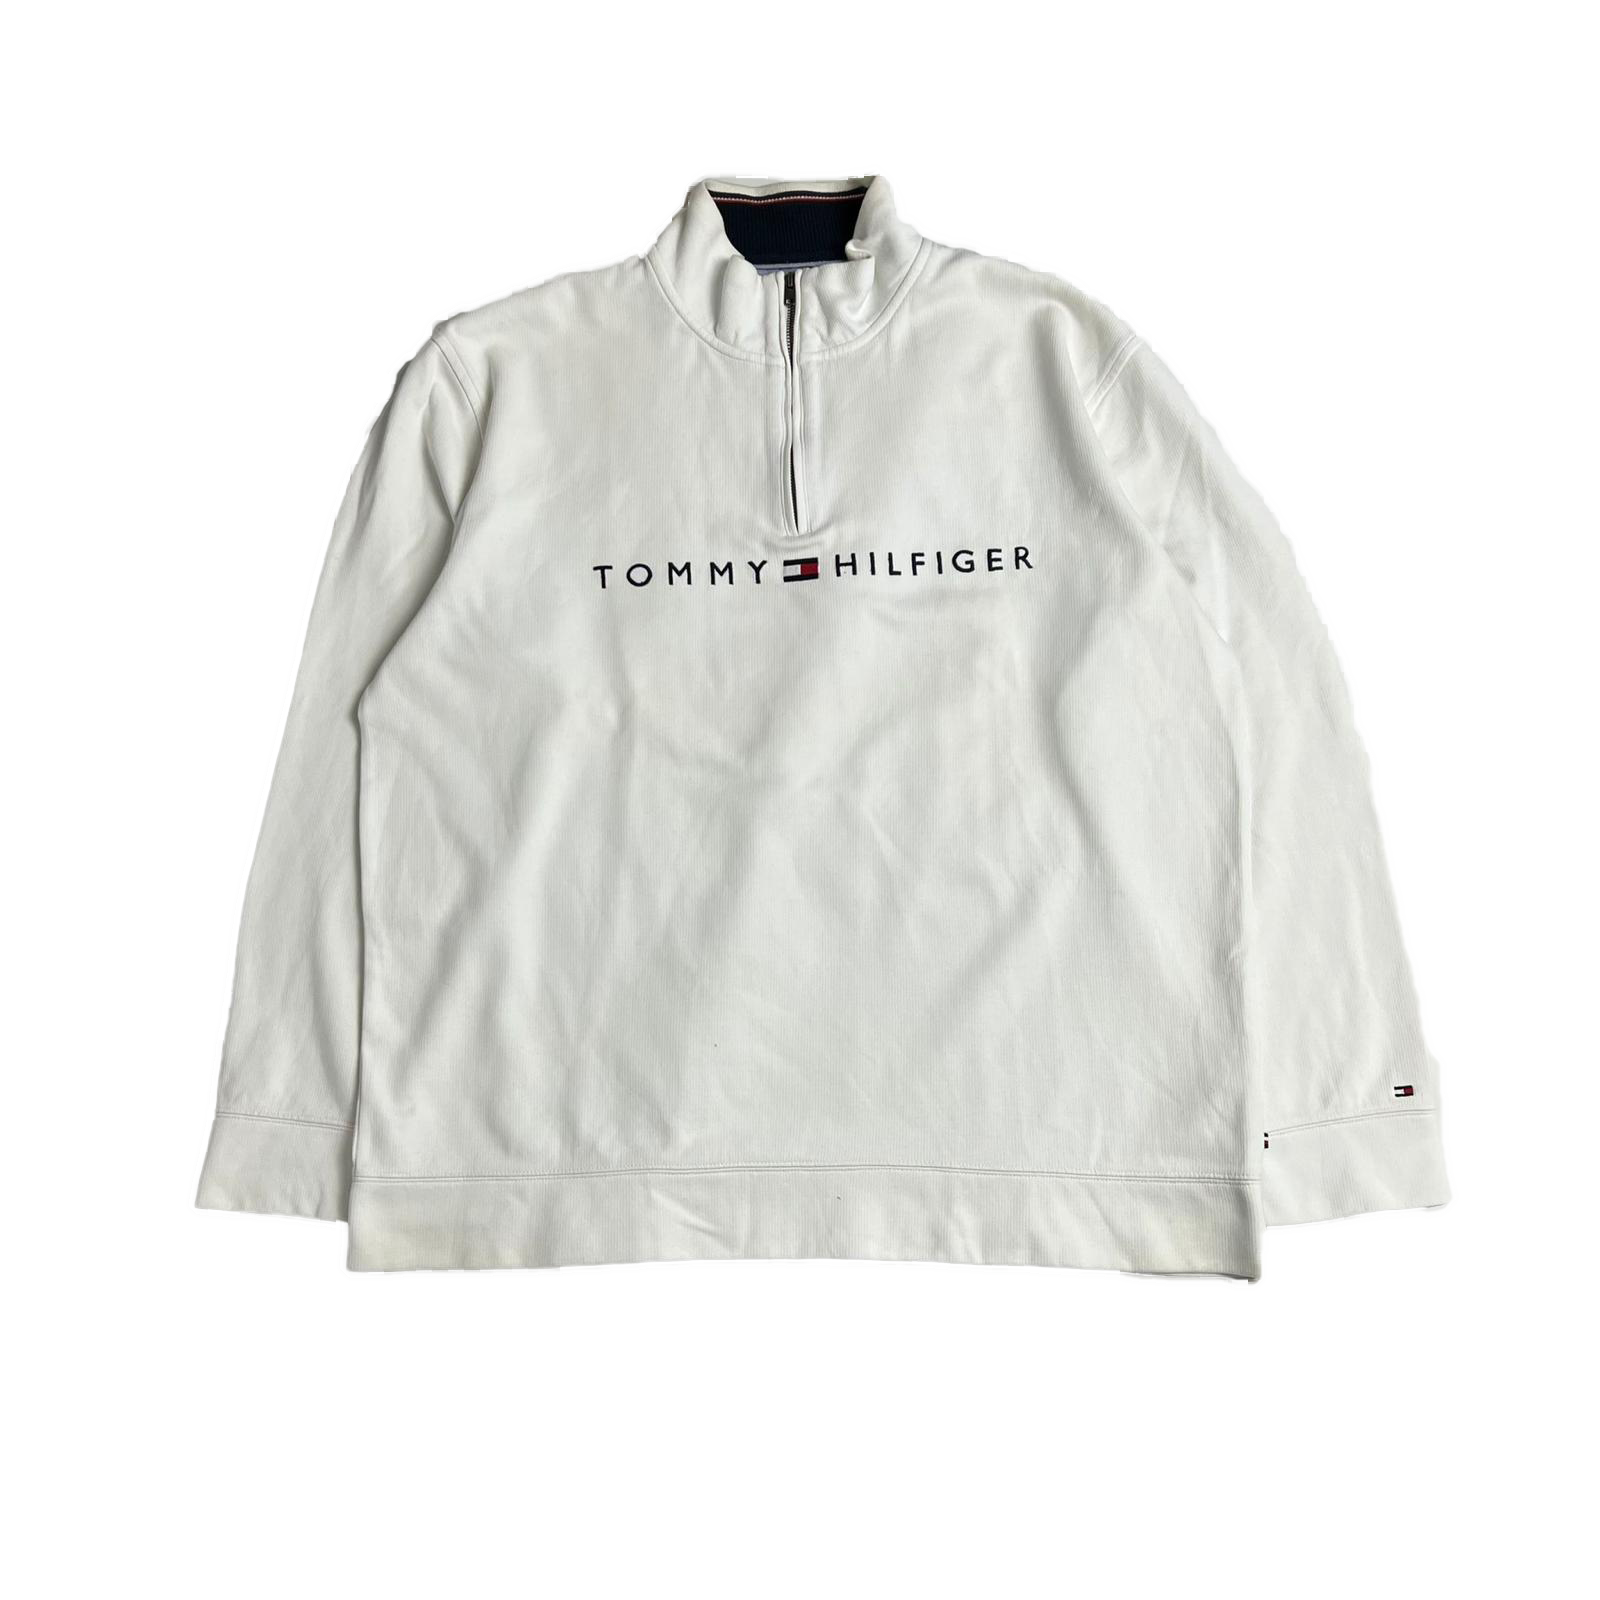 90's Tommy Hilfiger 1/4 zip sweatshirt